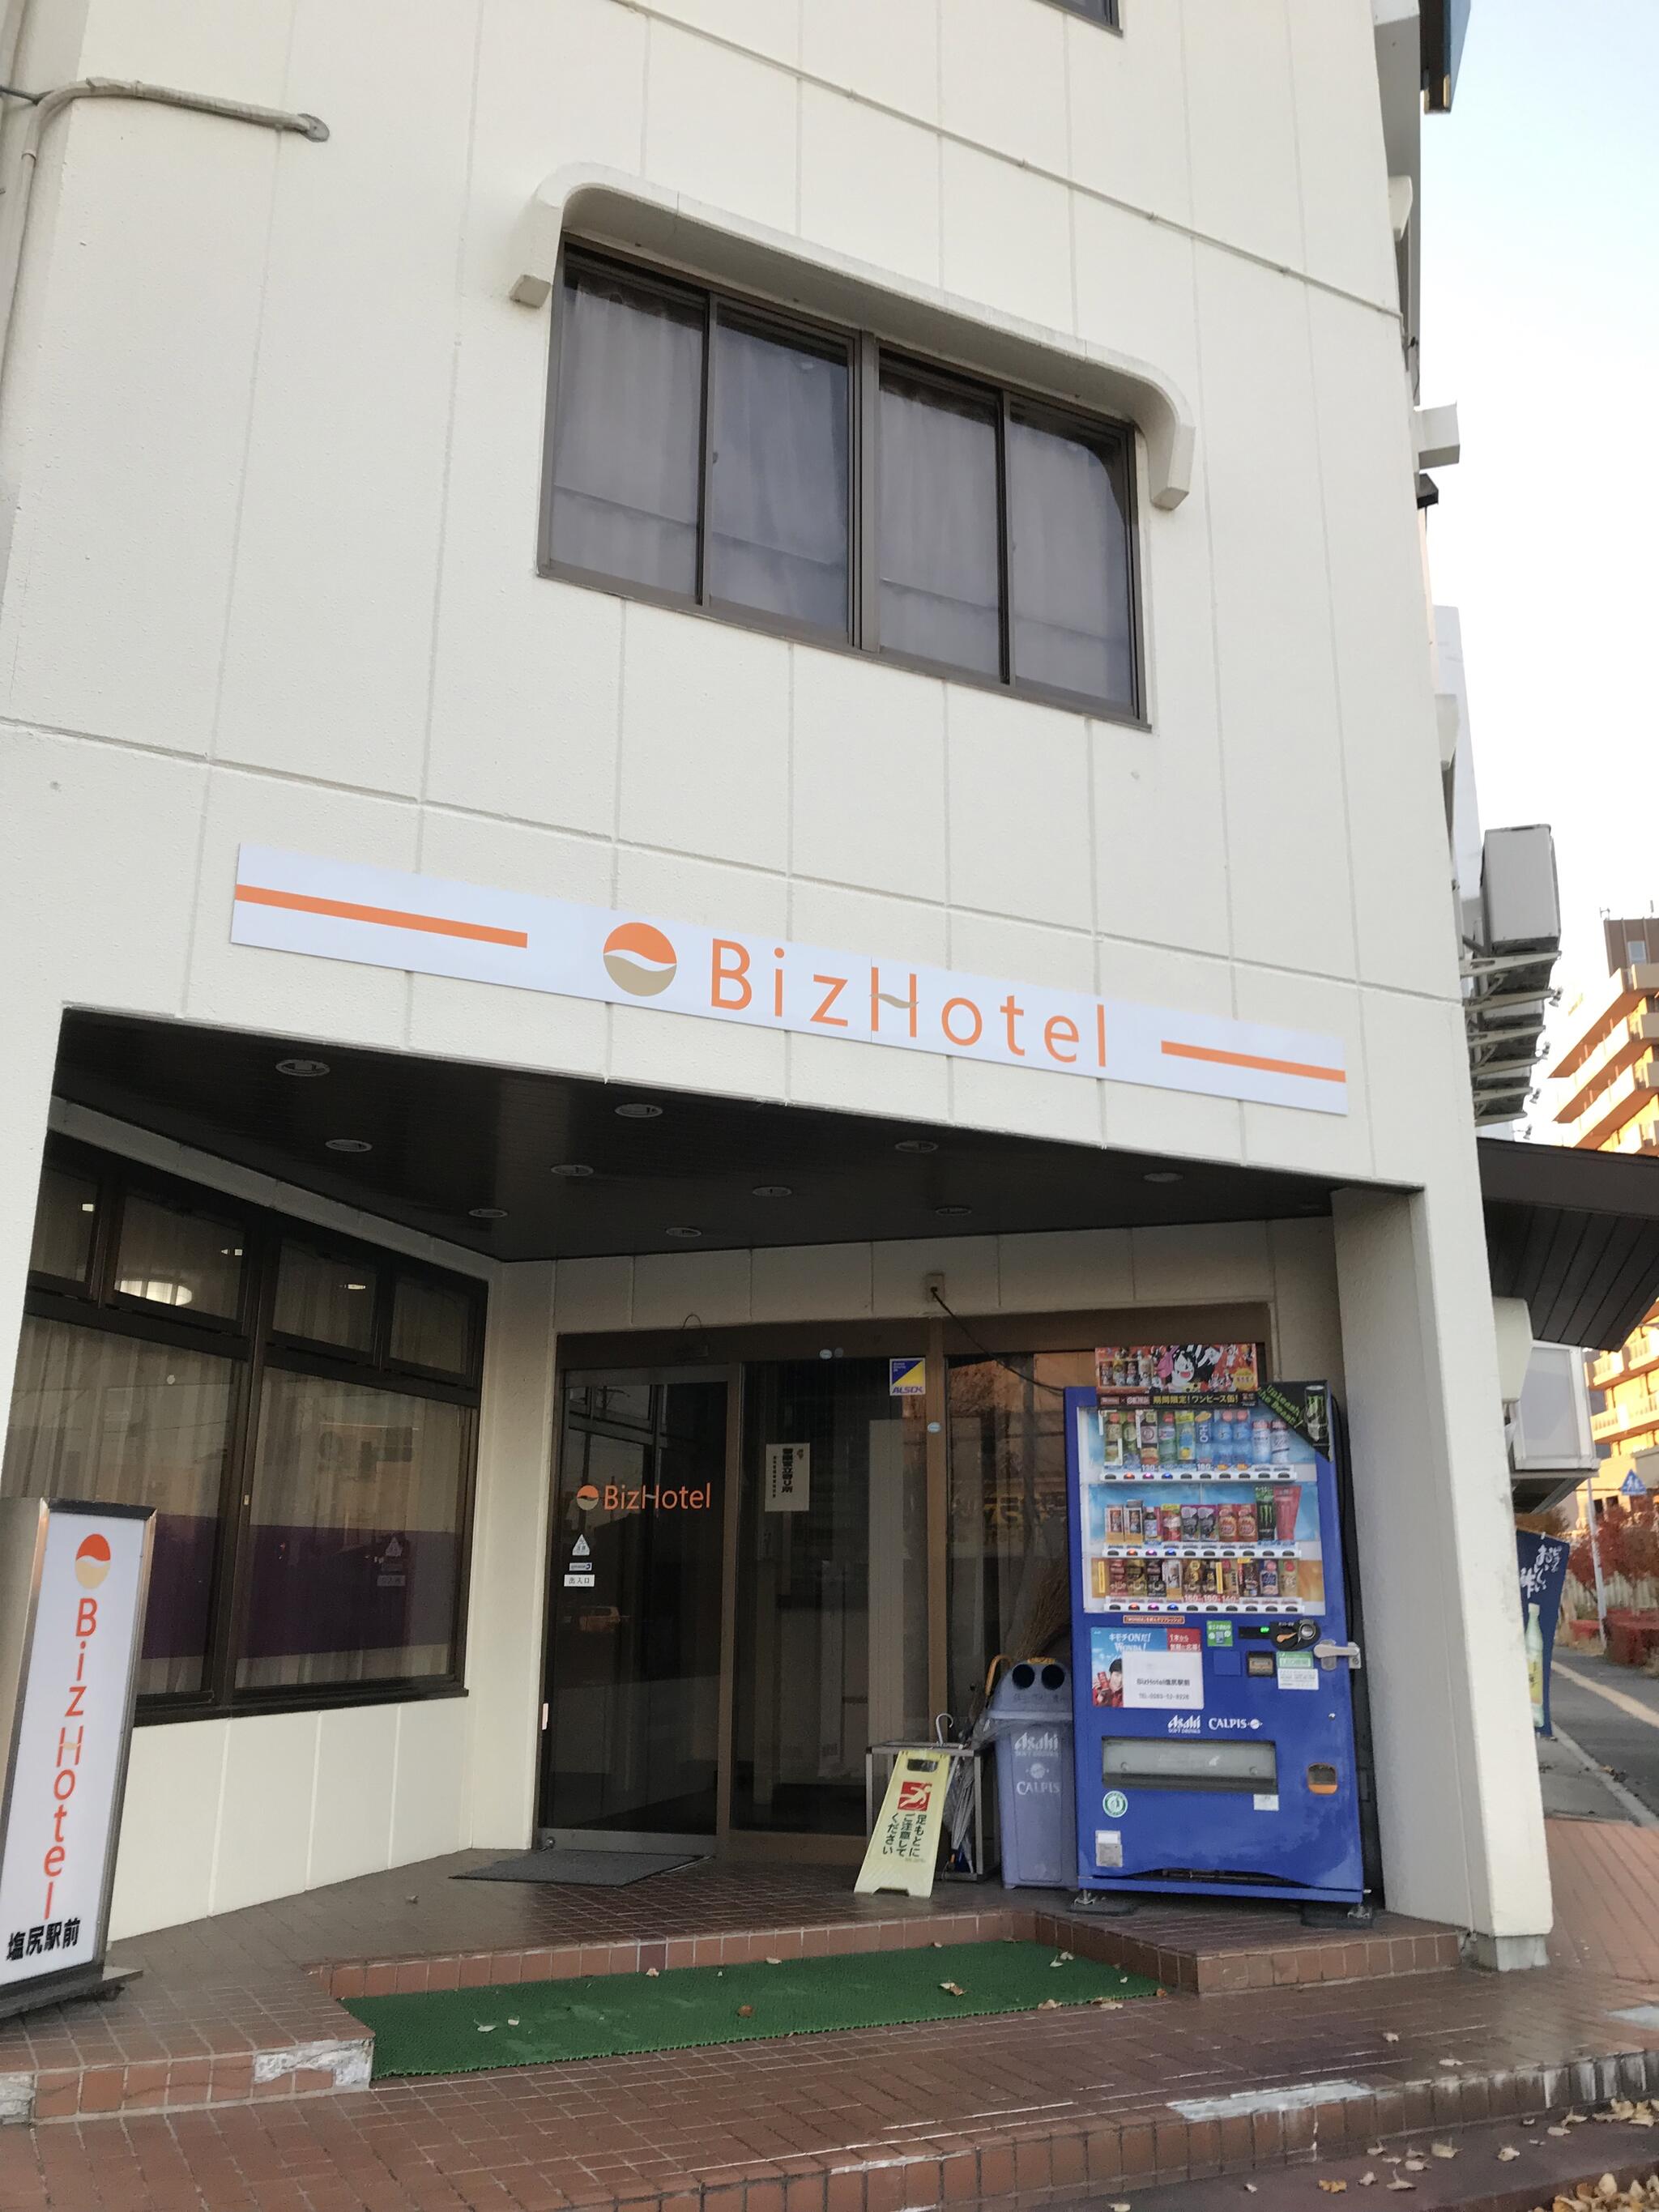 Biz Hotel 塩尻駅前の代表写真6